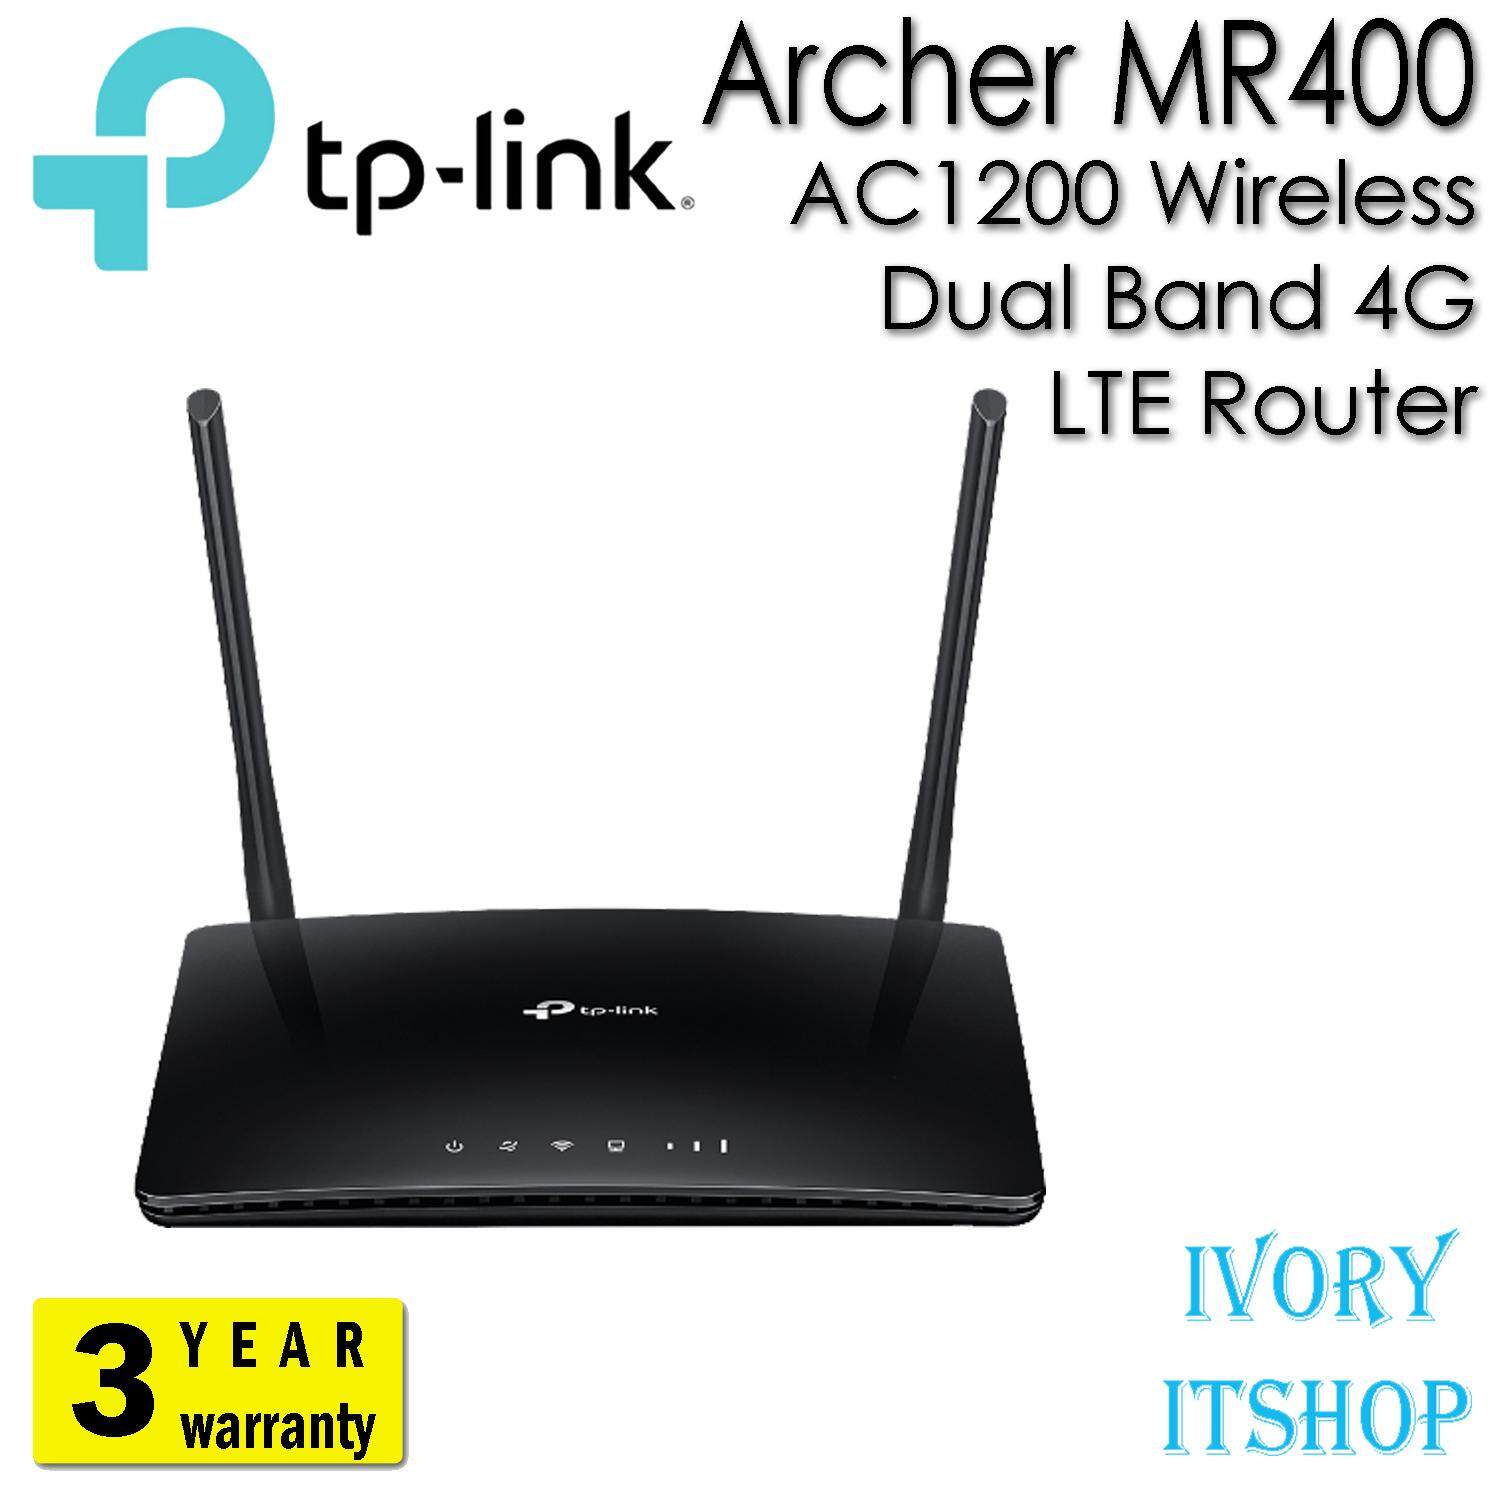 TP-Link AC1200 Wireless Dual Band 4G LTE Router Archer MR400/ivoryitshop